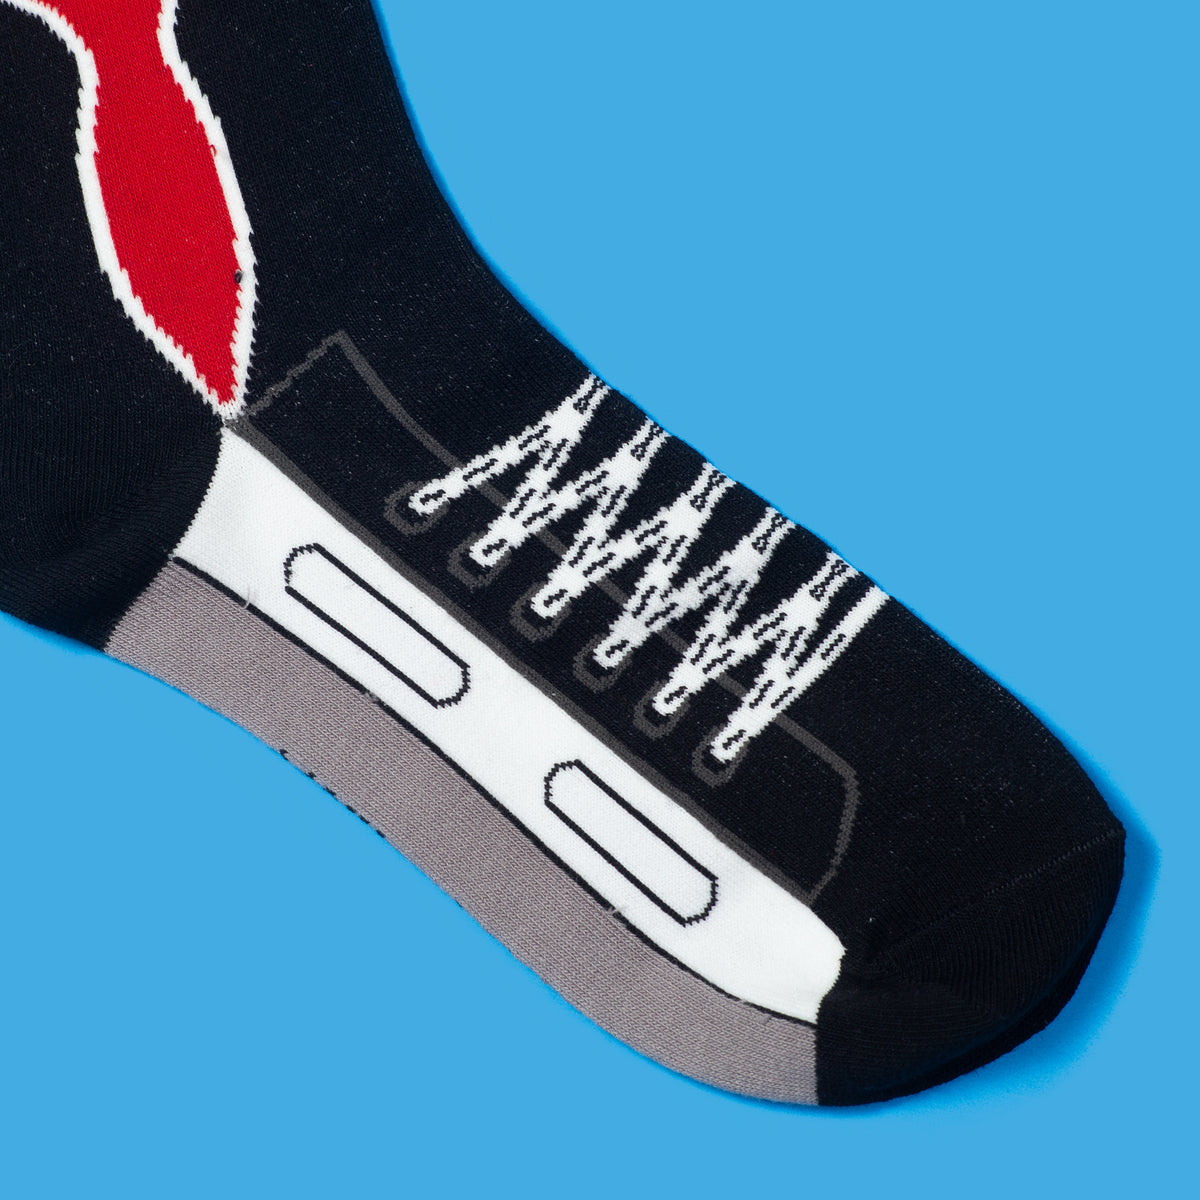 Canadian Hockey Skate Socks - Main and Local